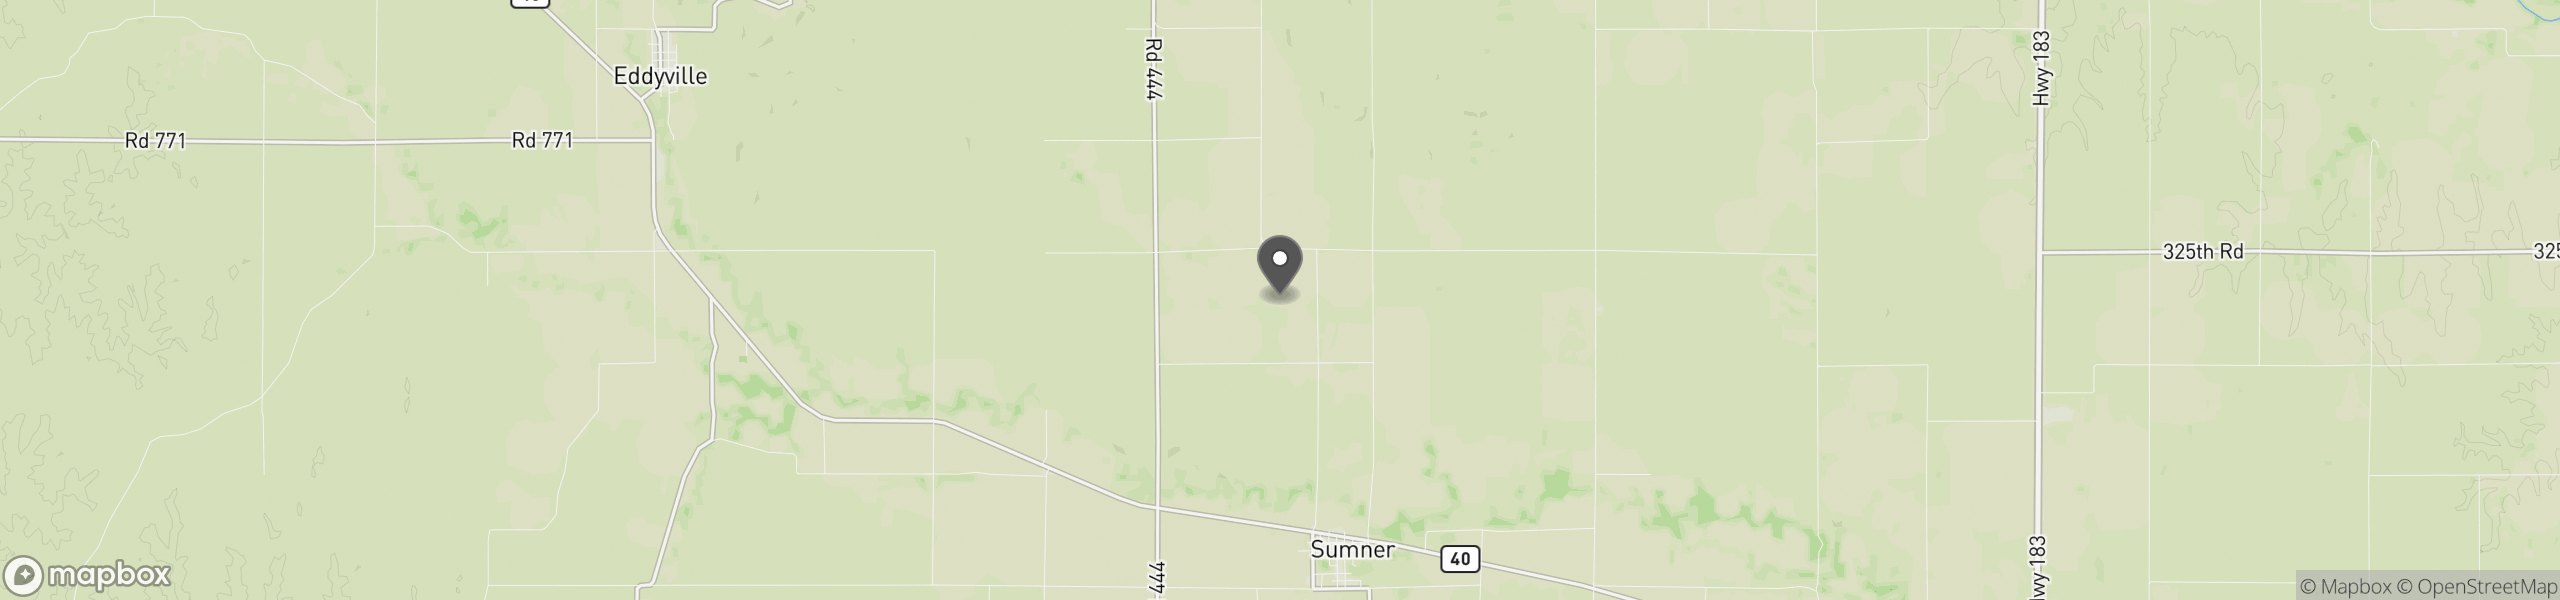 Sumner, NE 68878